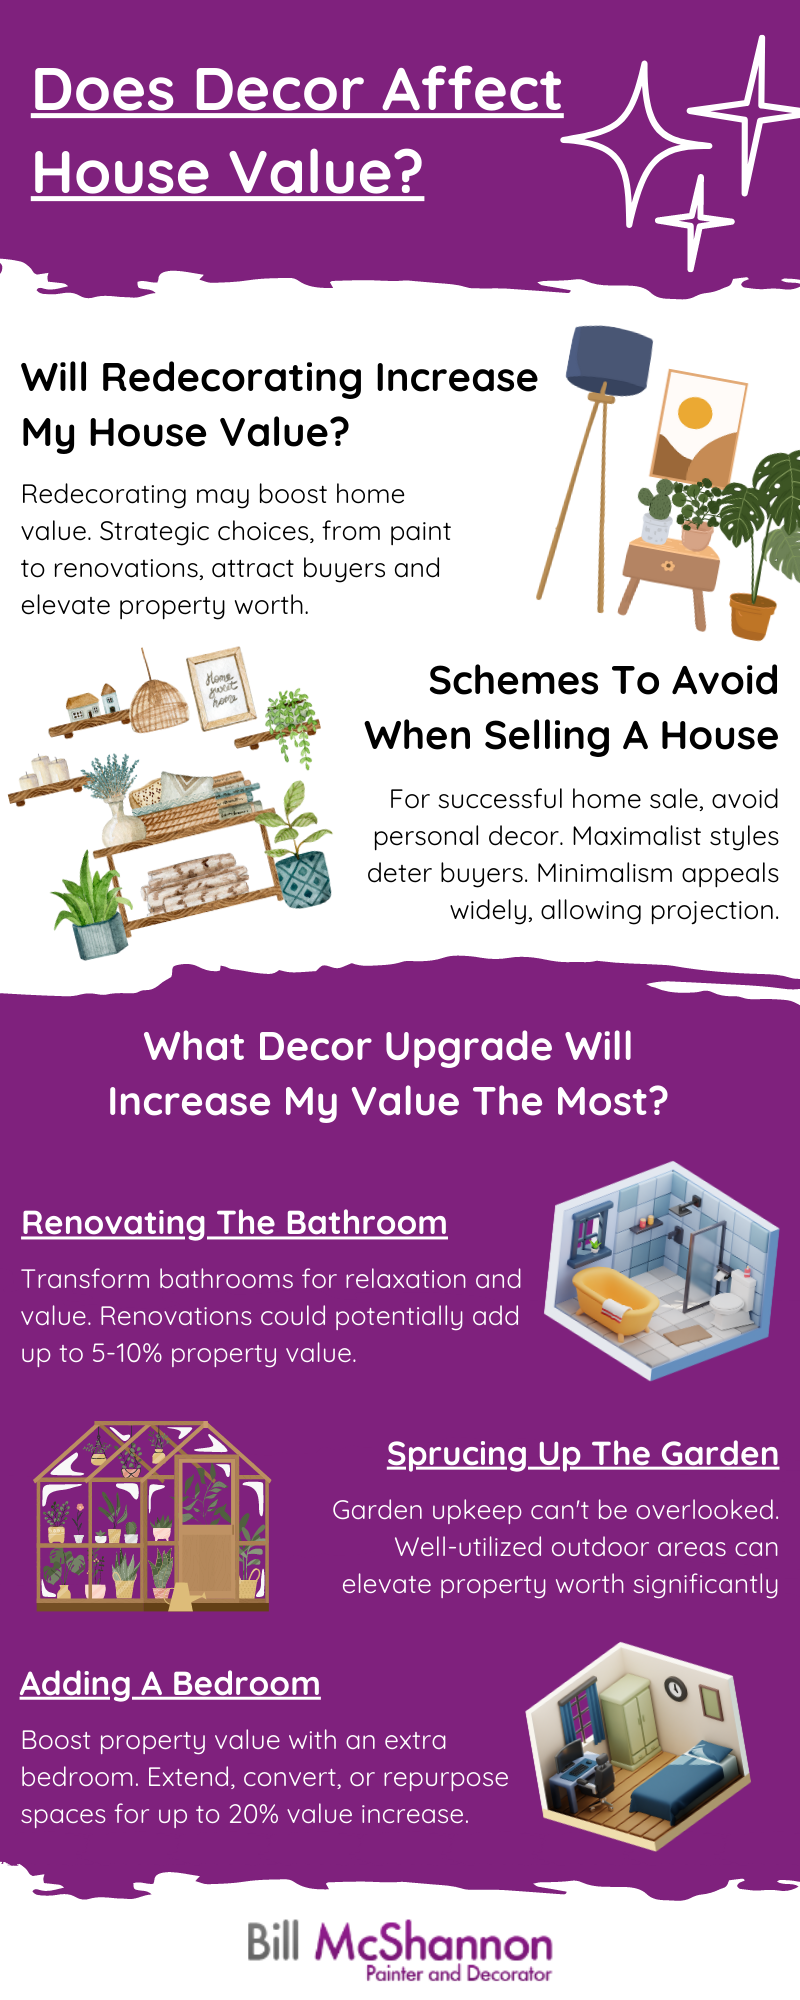 Does Decor Affect House Value?